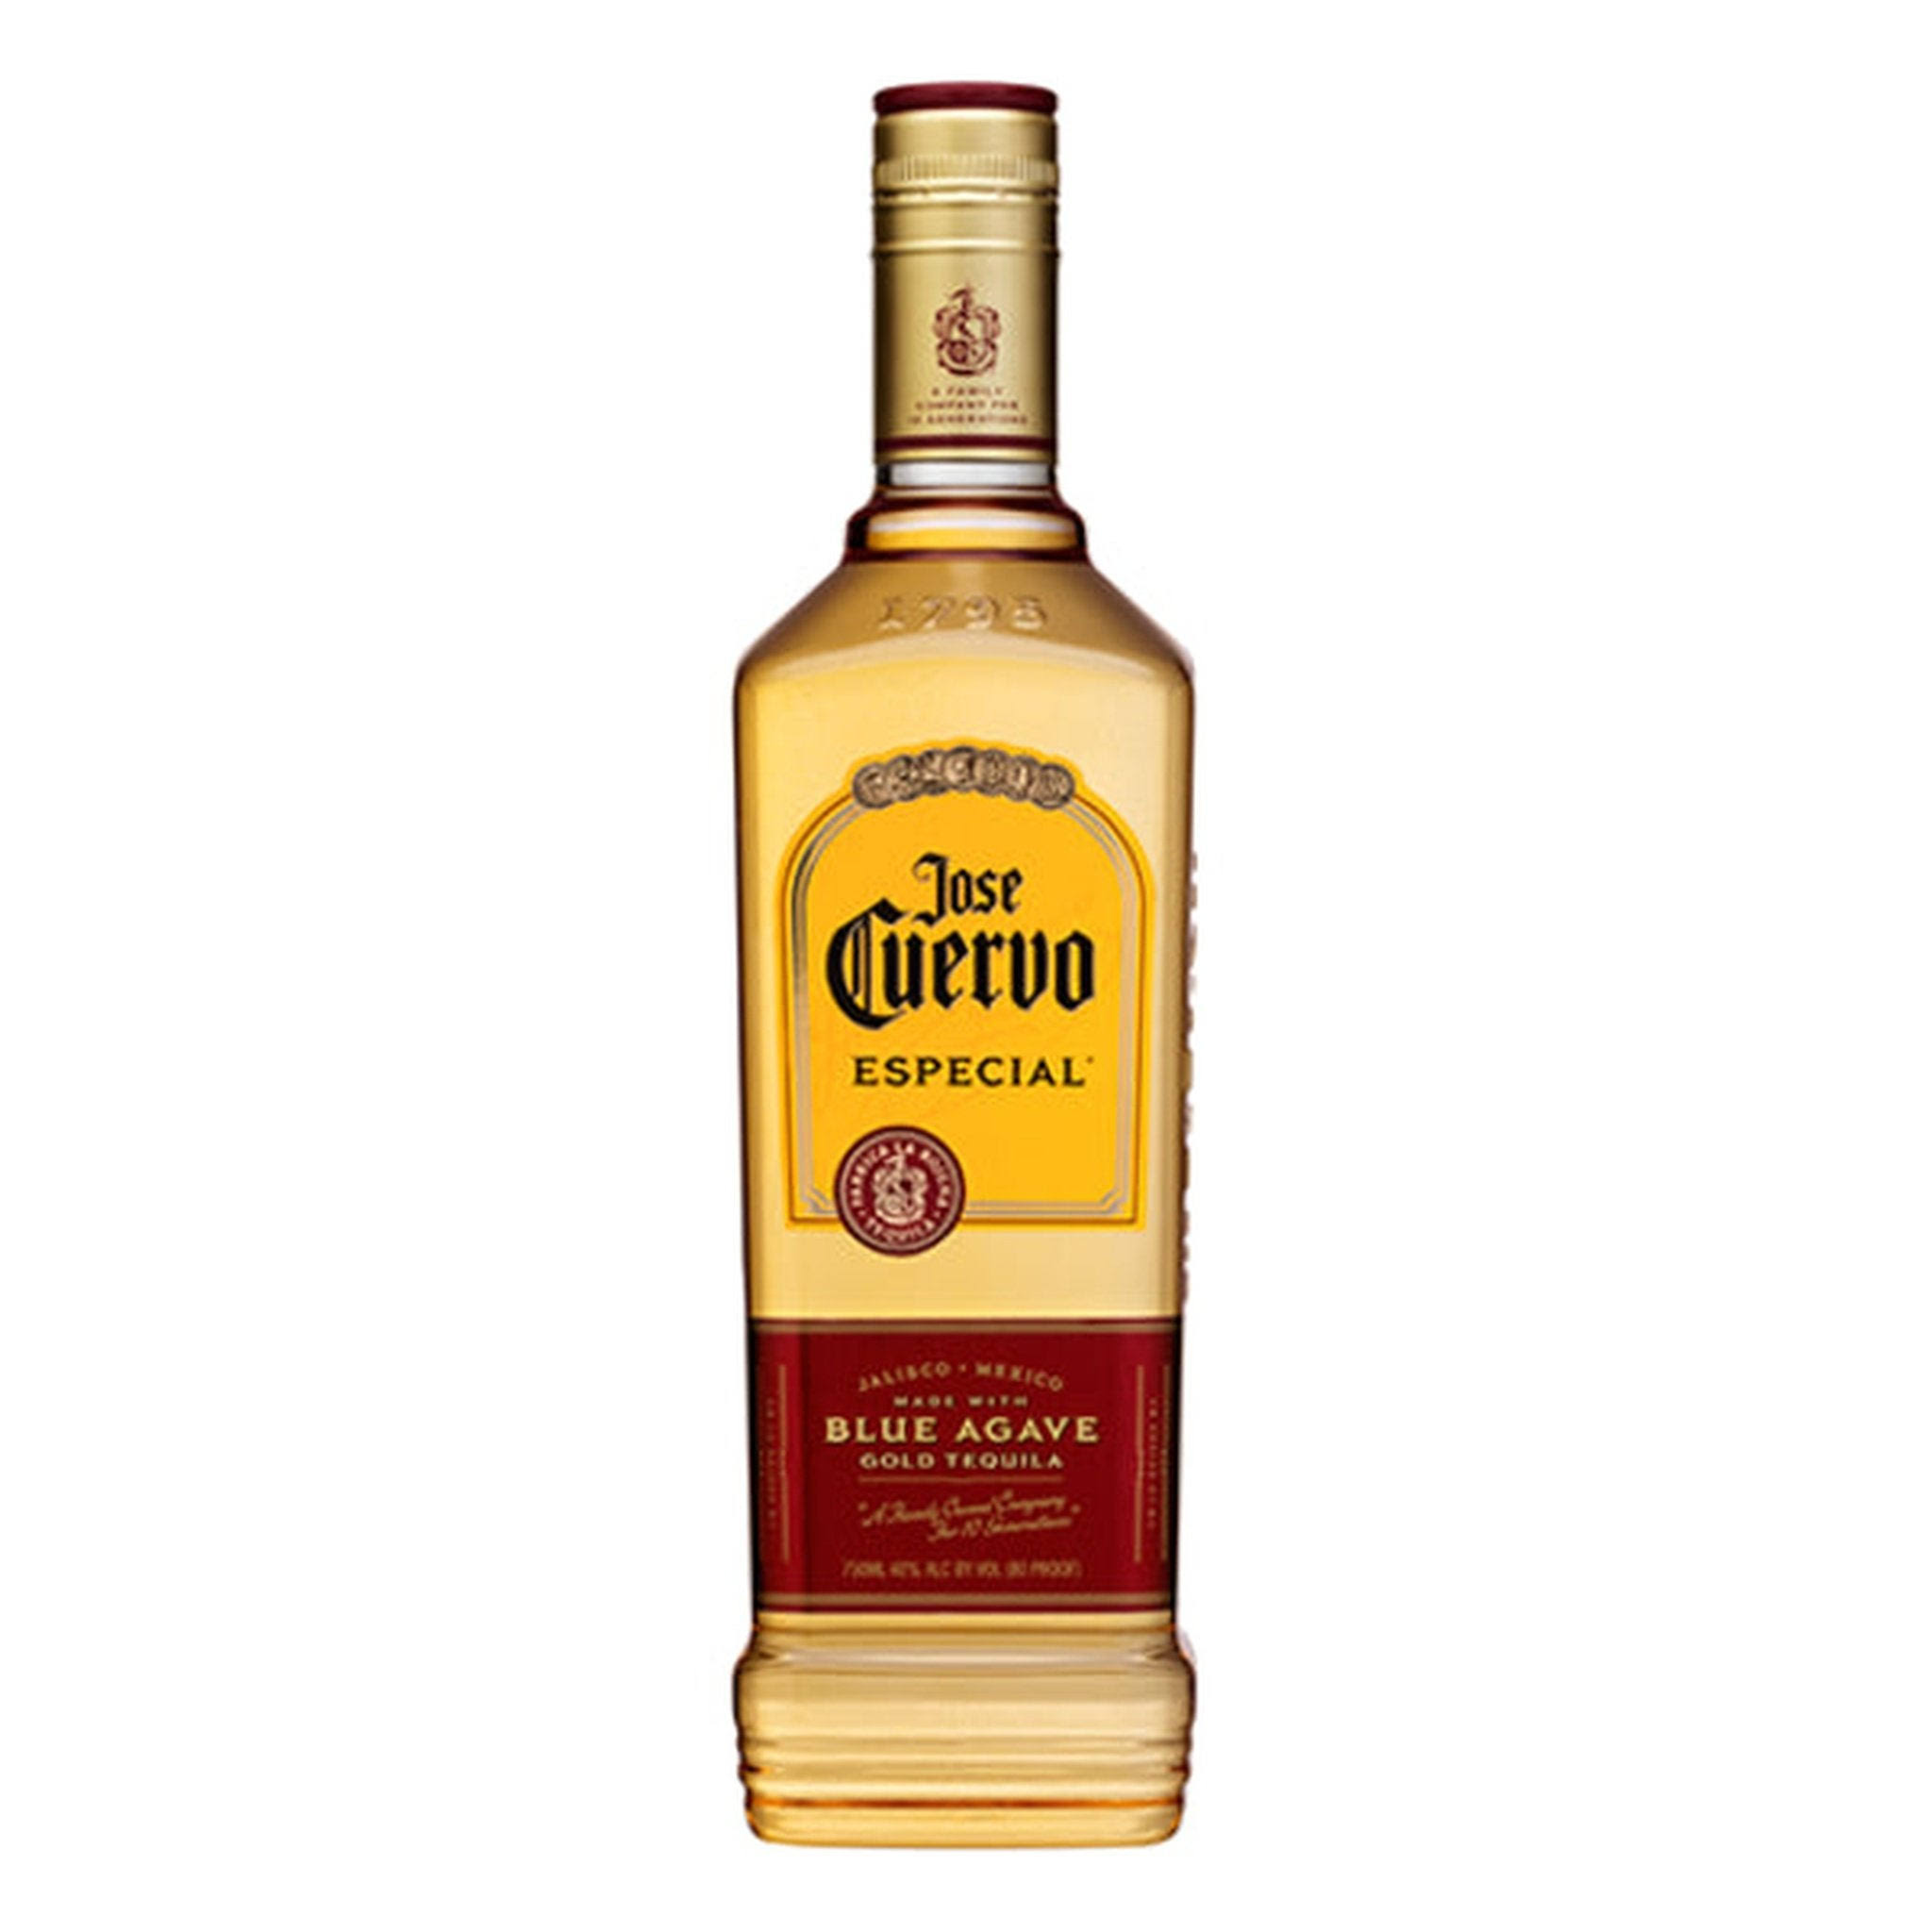 Jose Cuervo Especial Tequila, Gold - 375 ml